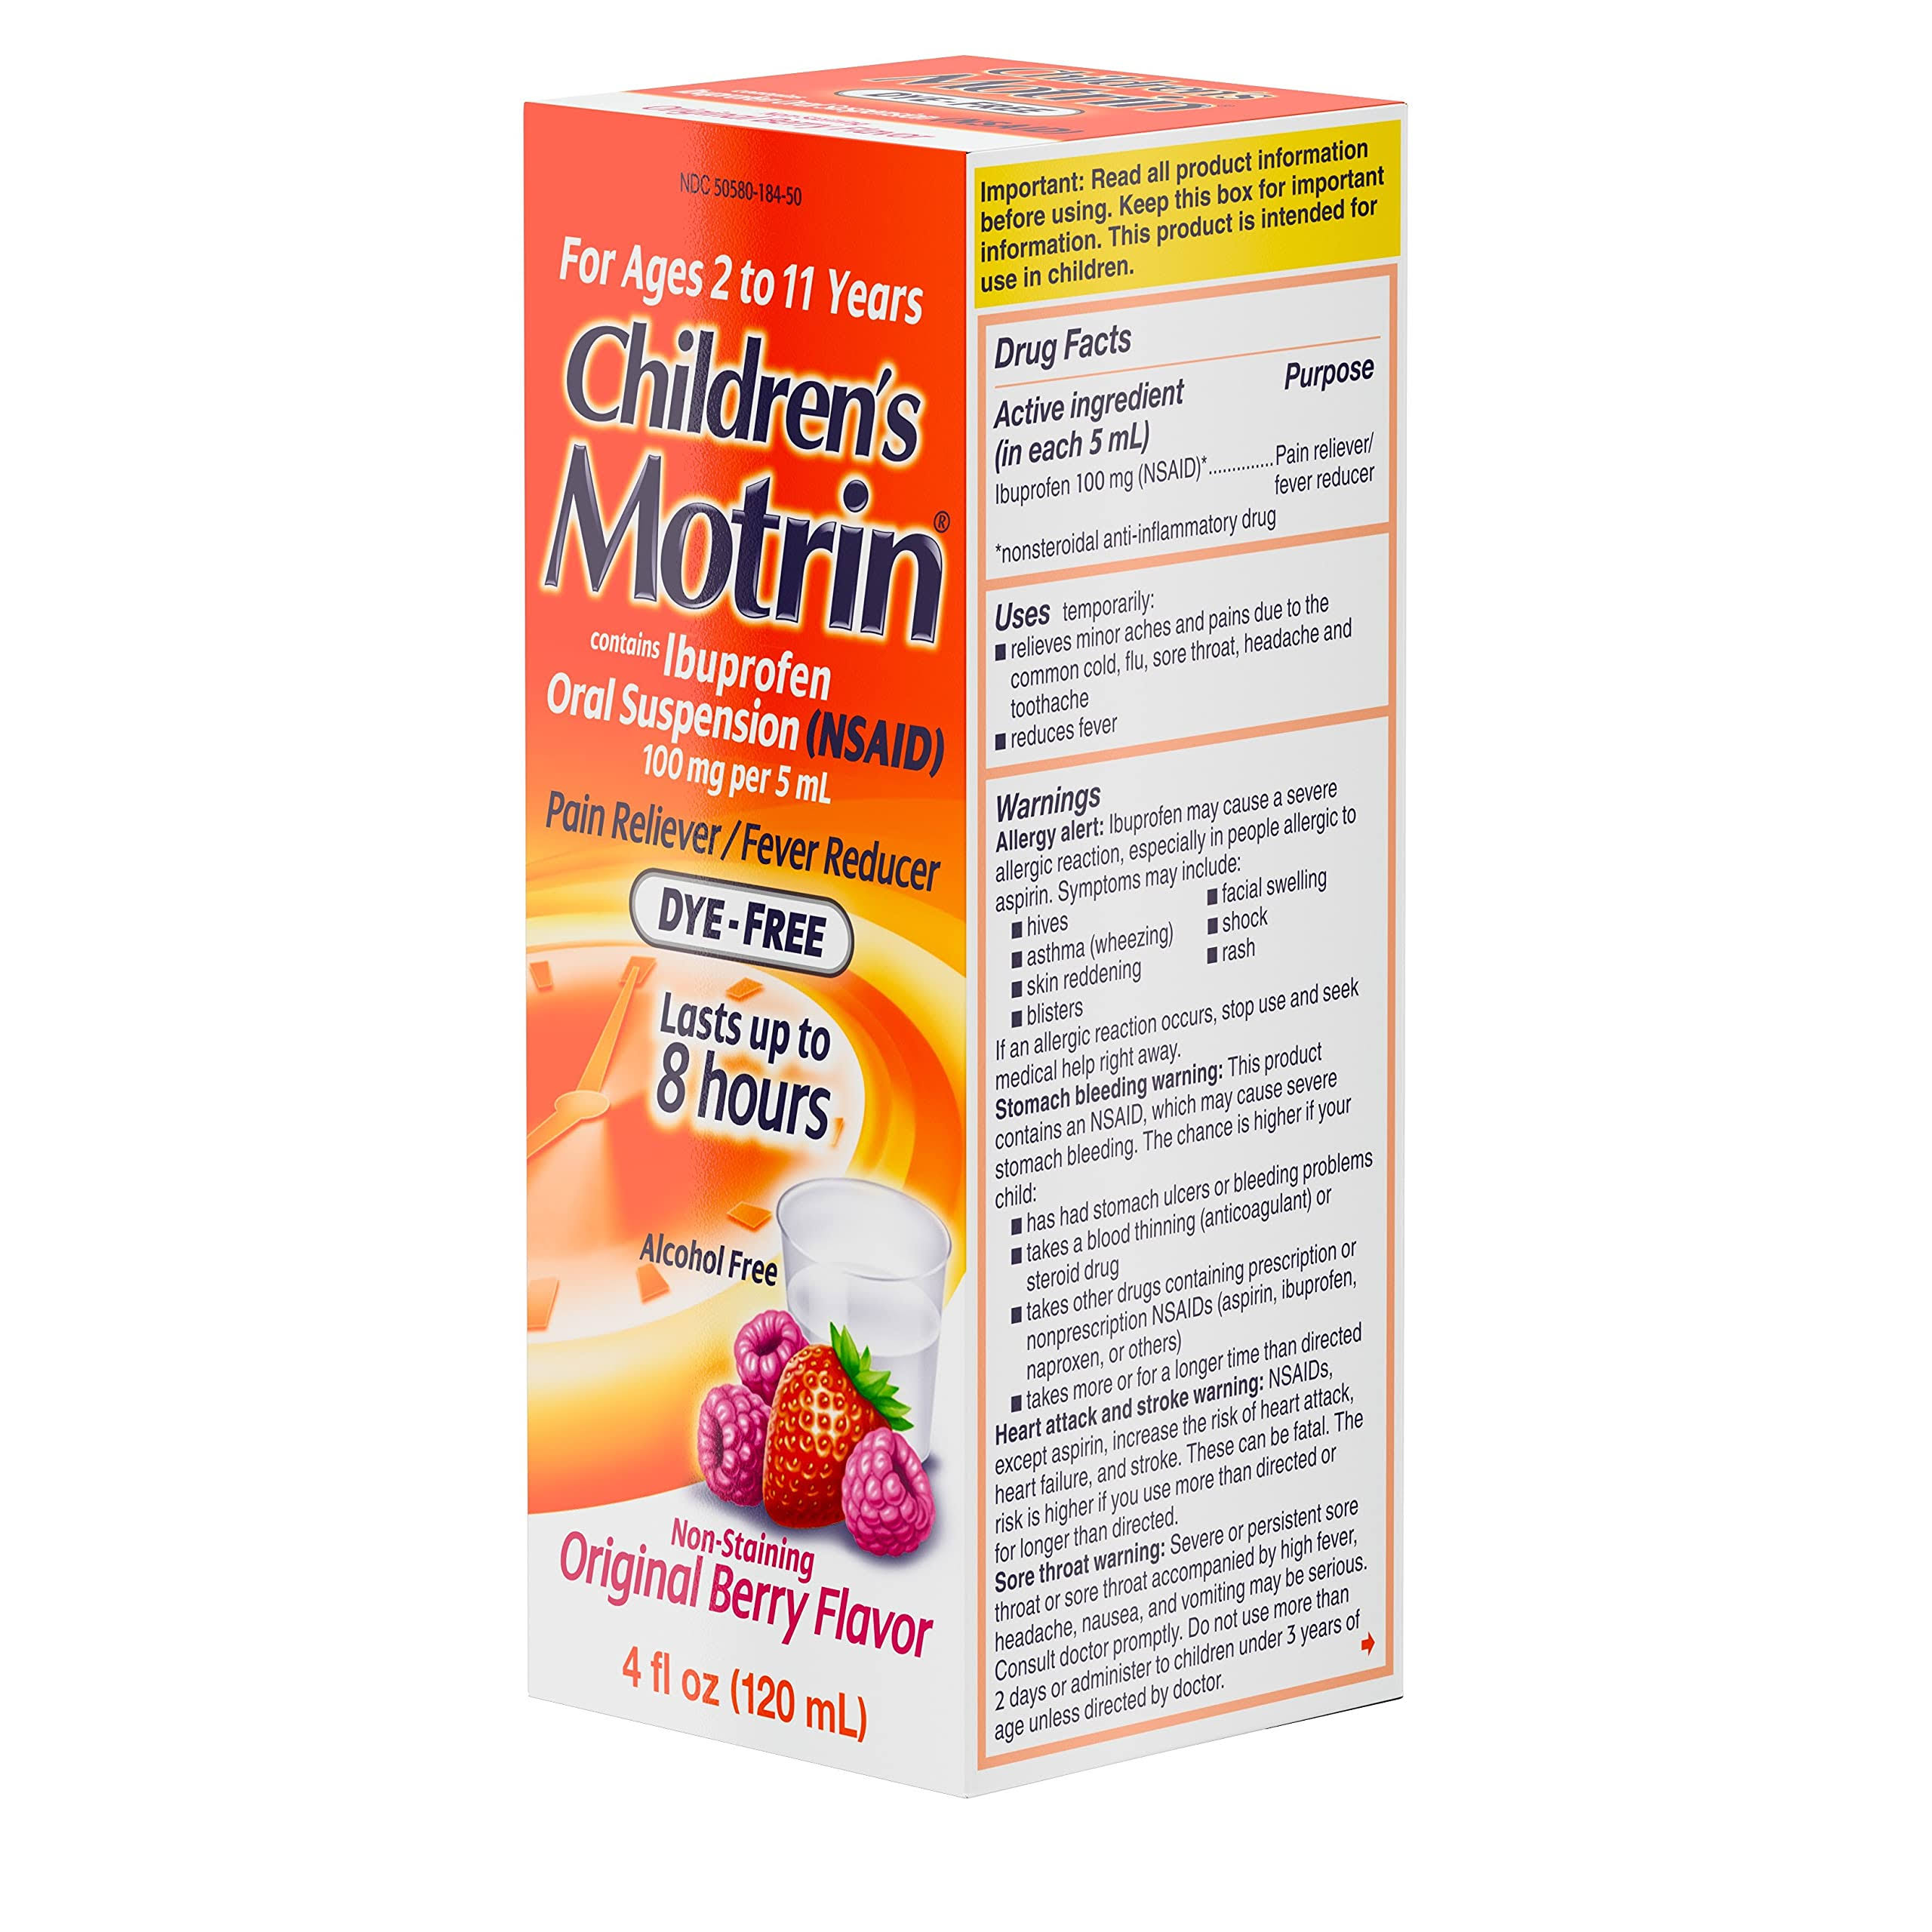 Motrin Children's Dye-Free Ibuprofen Oral Suspension - Original Berry, 4oz